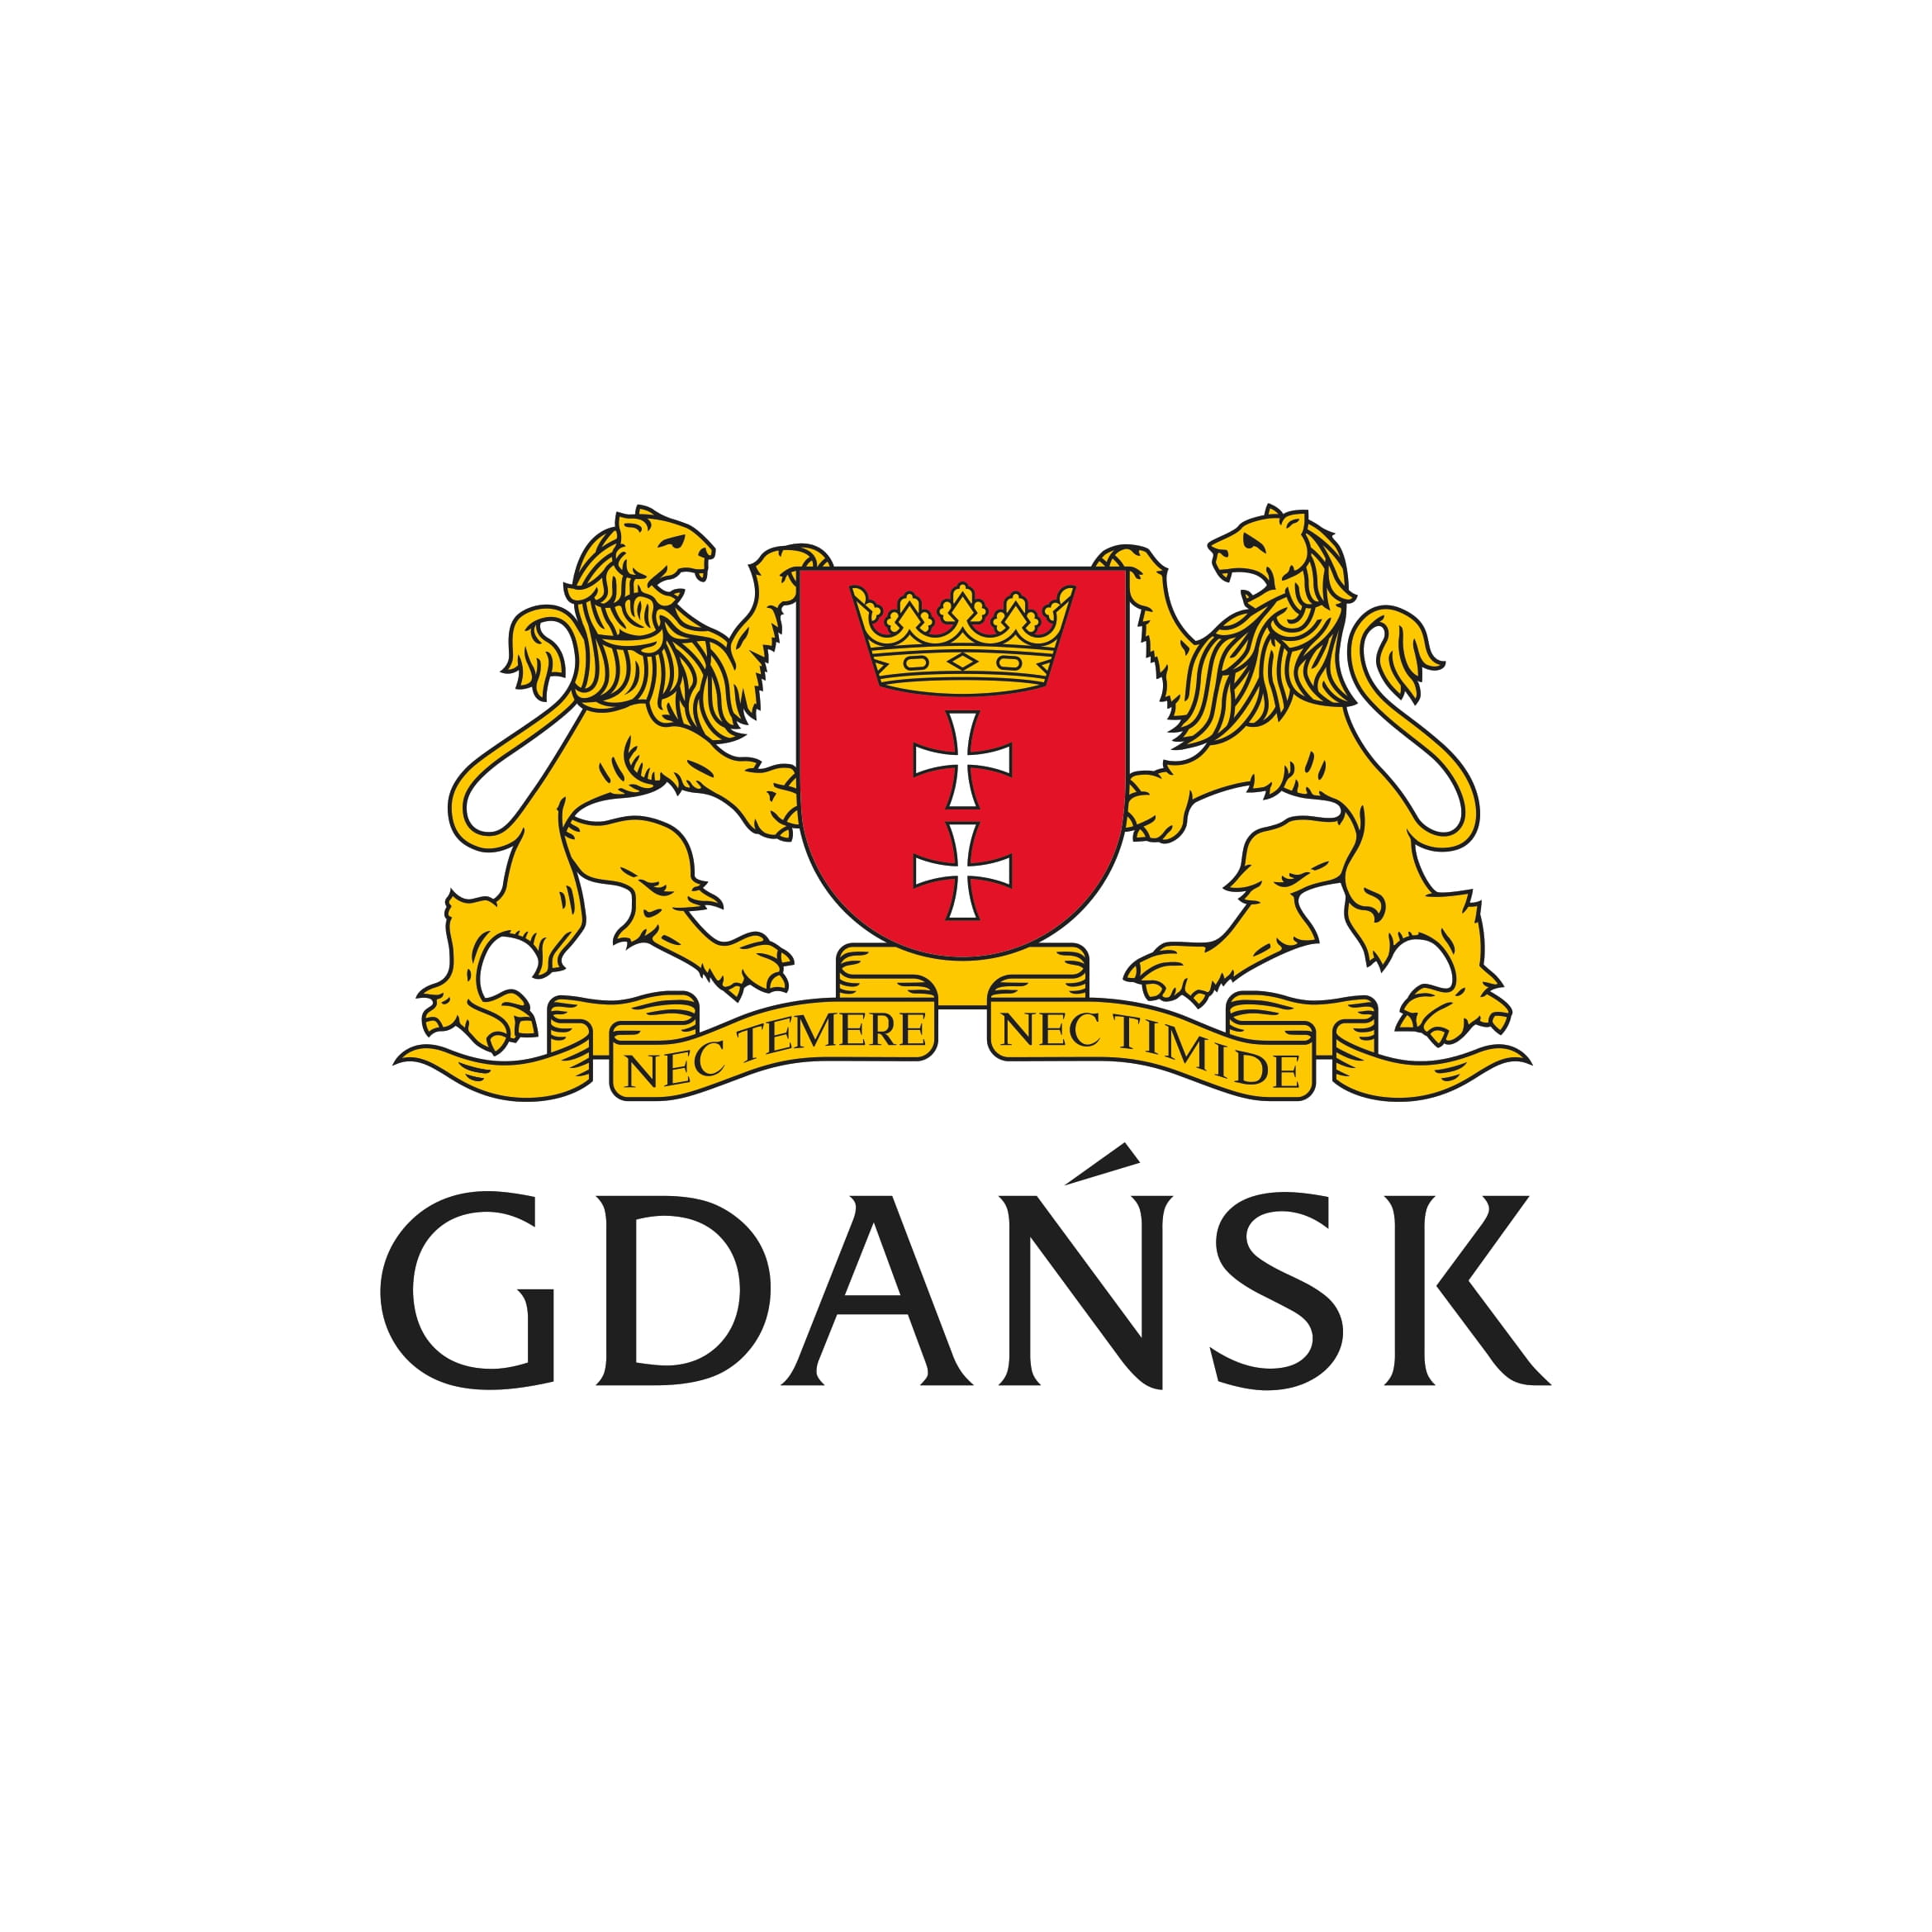 Co-financed by the City of Gdańsk